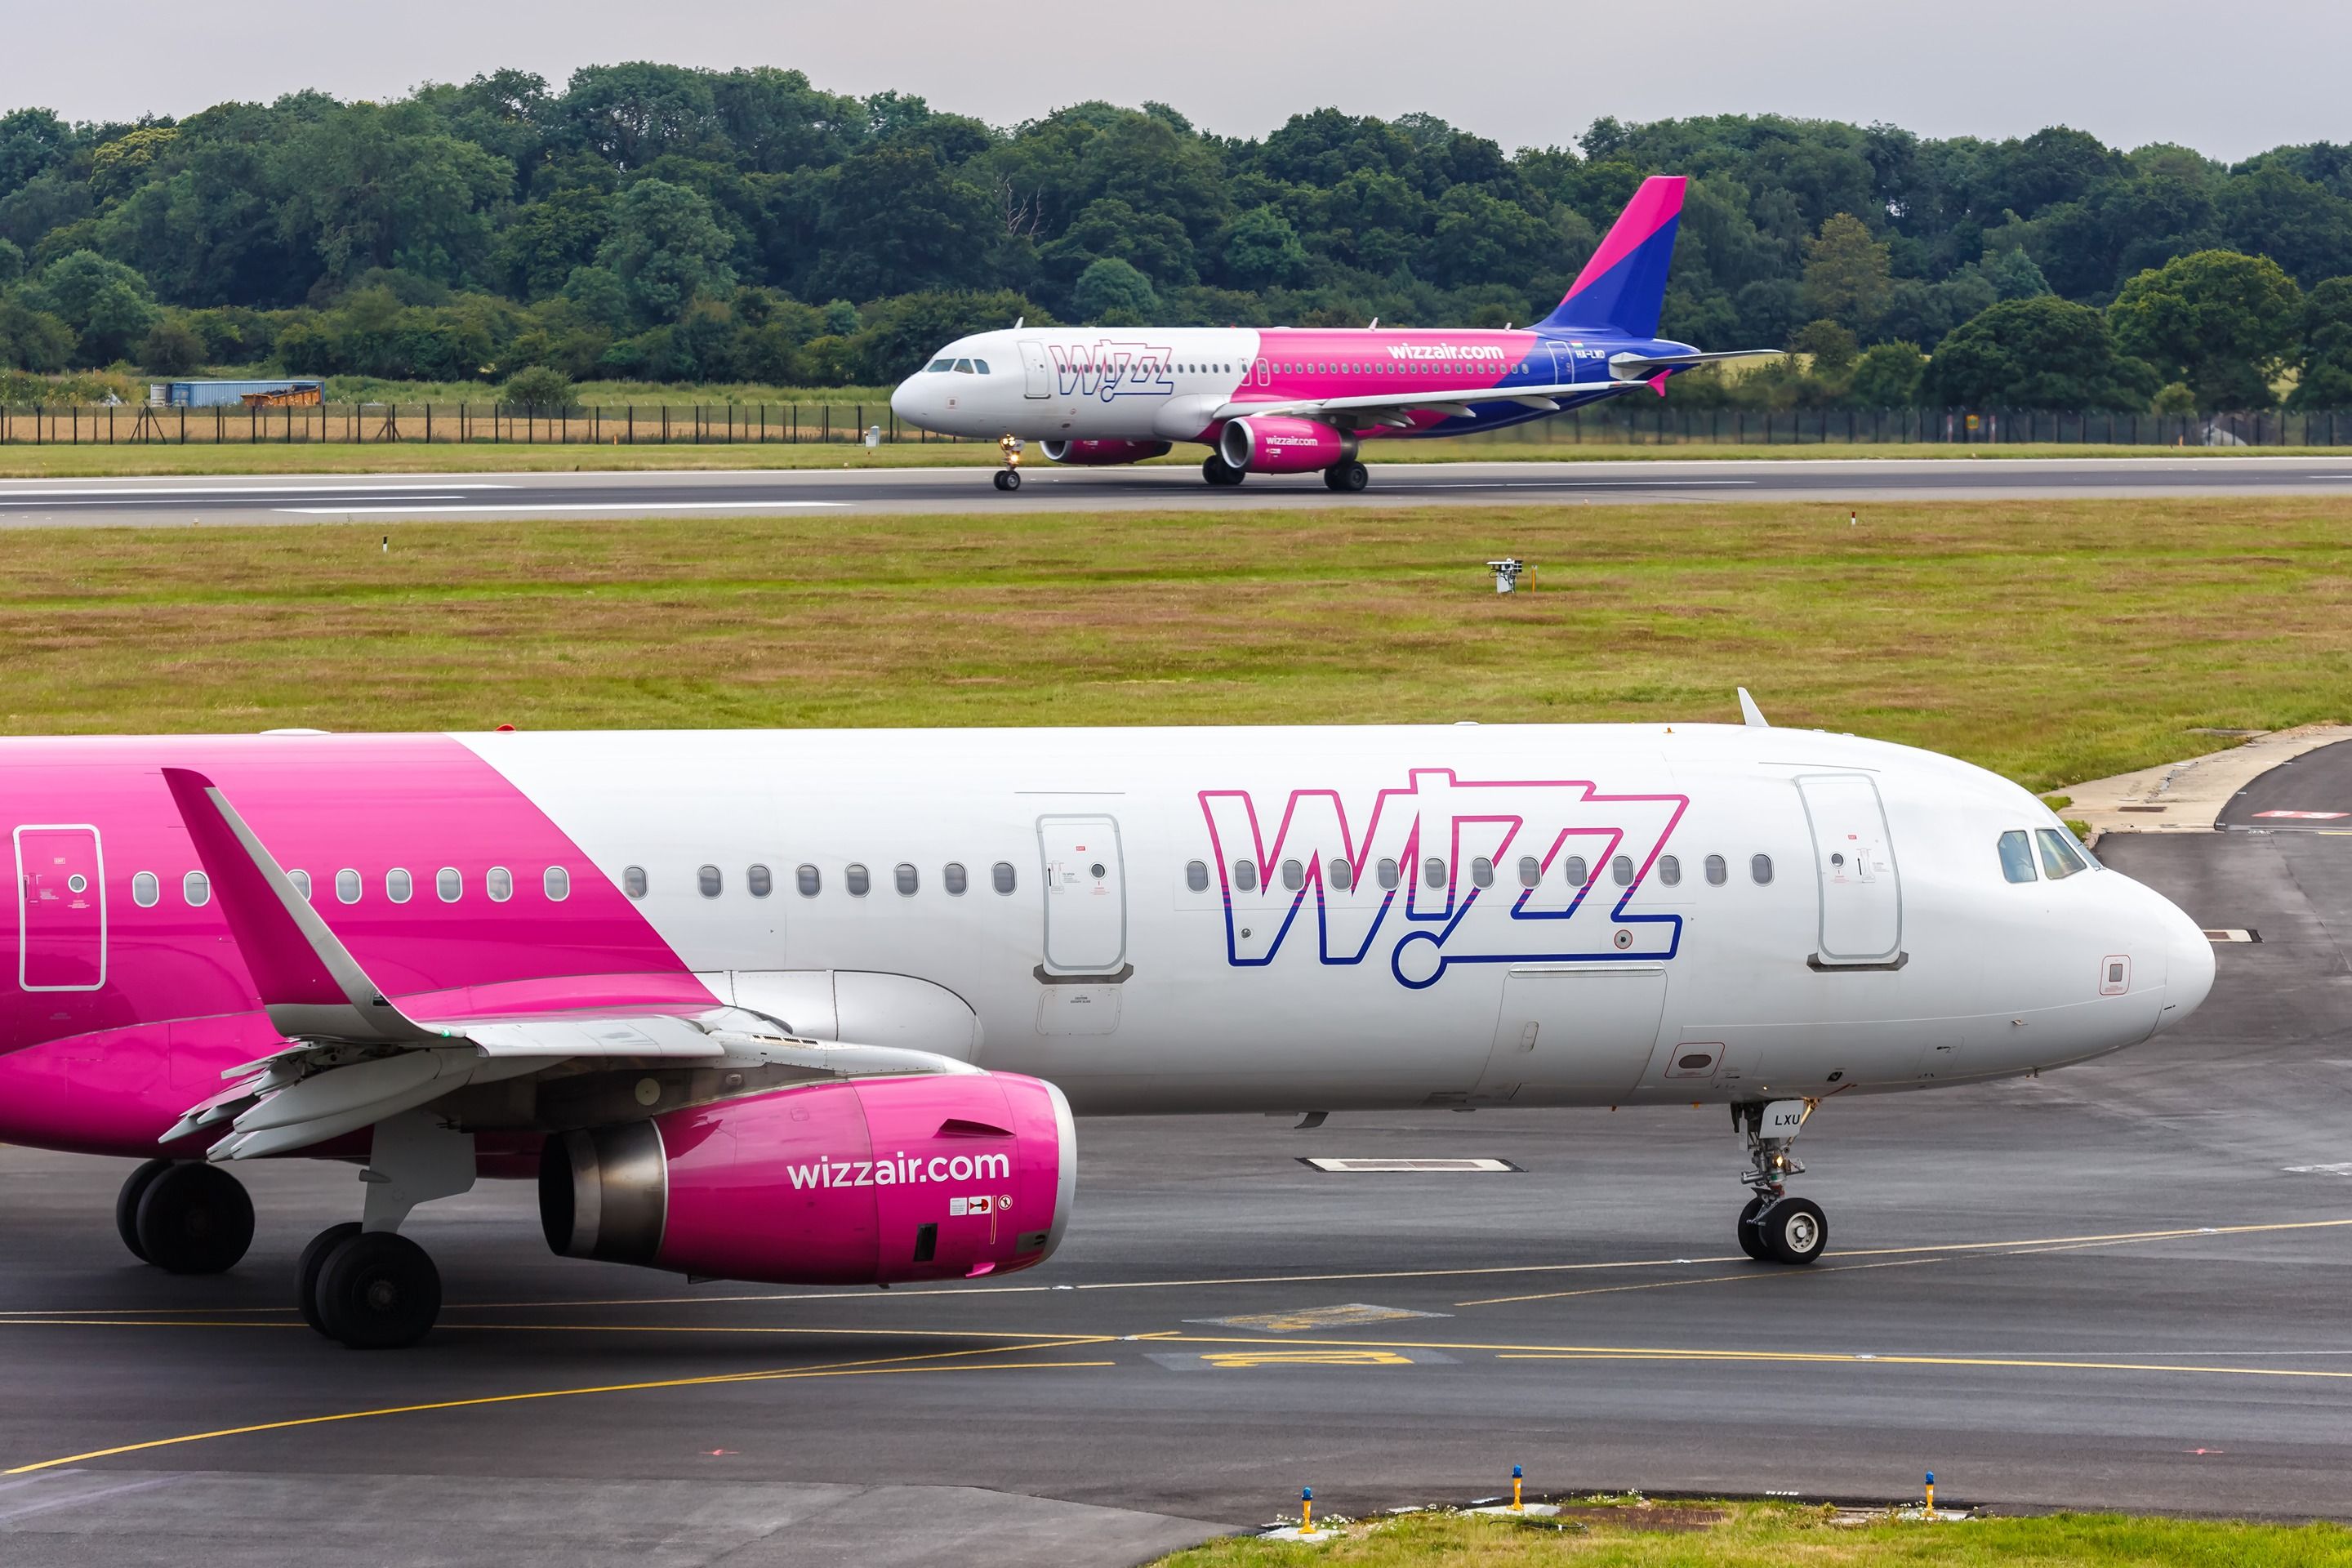 Wizz Air aircraft at Luton